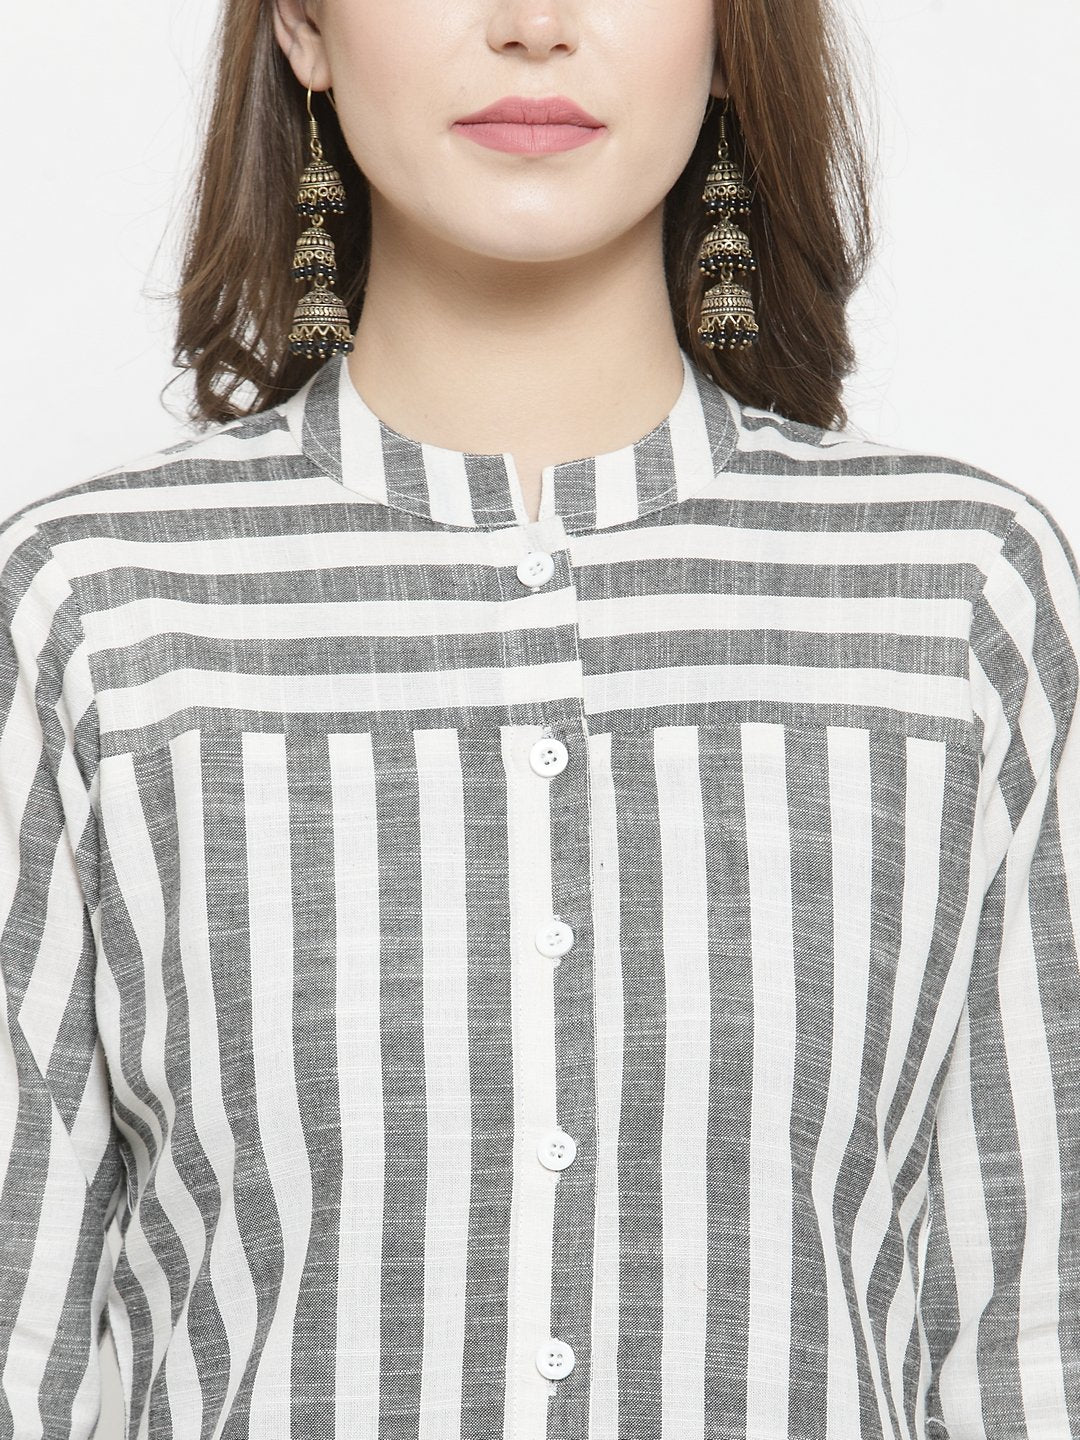 Women's Grey & Off White Striped Cotton Straight Kurta - Jompers